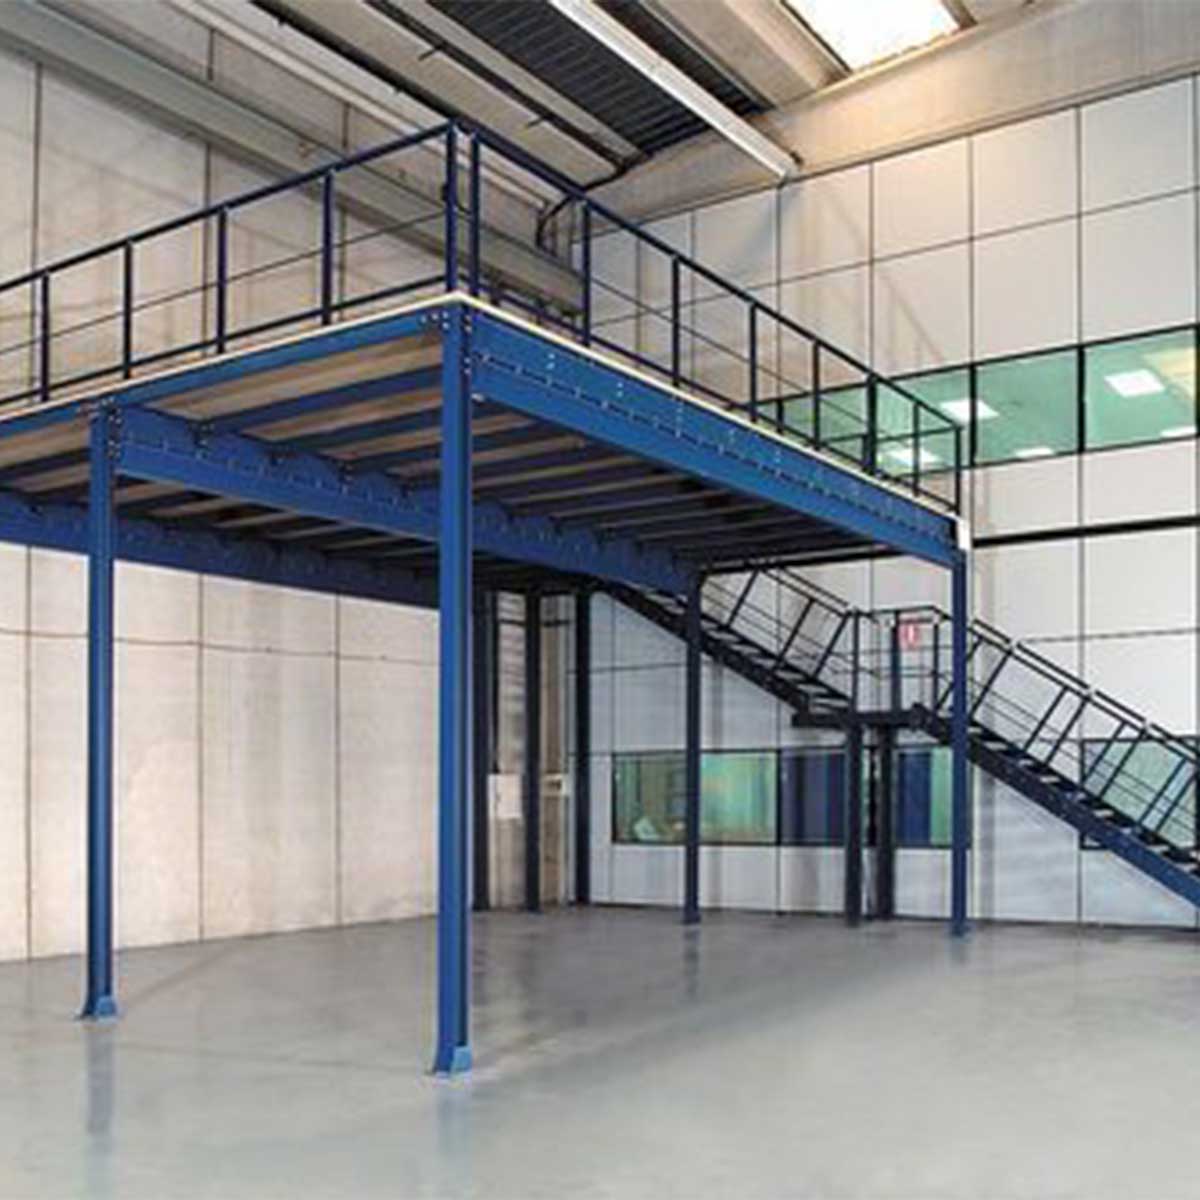 mezzanine storage rack Manufacturers, Suppliers in Kundli Industrial Area